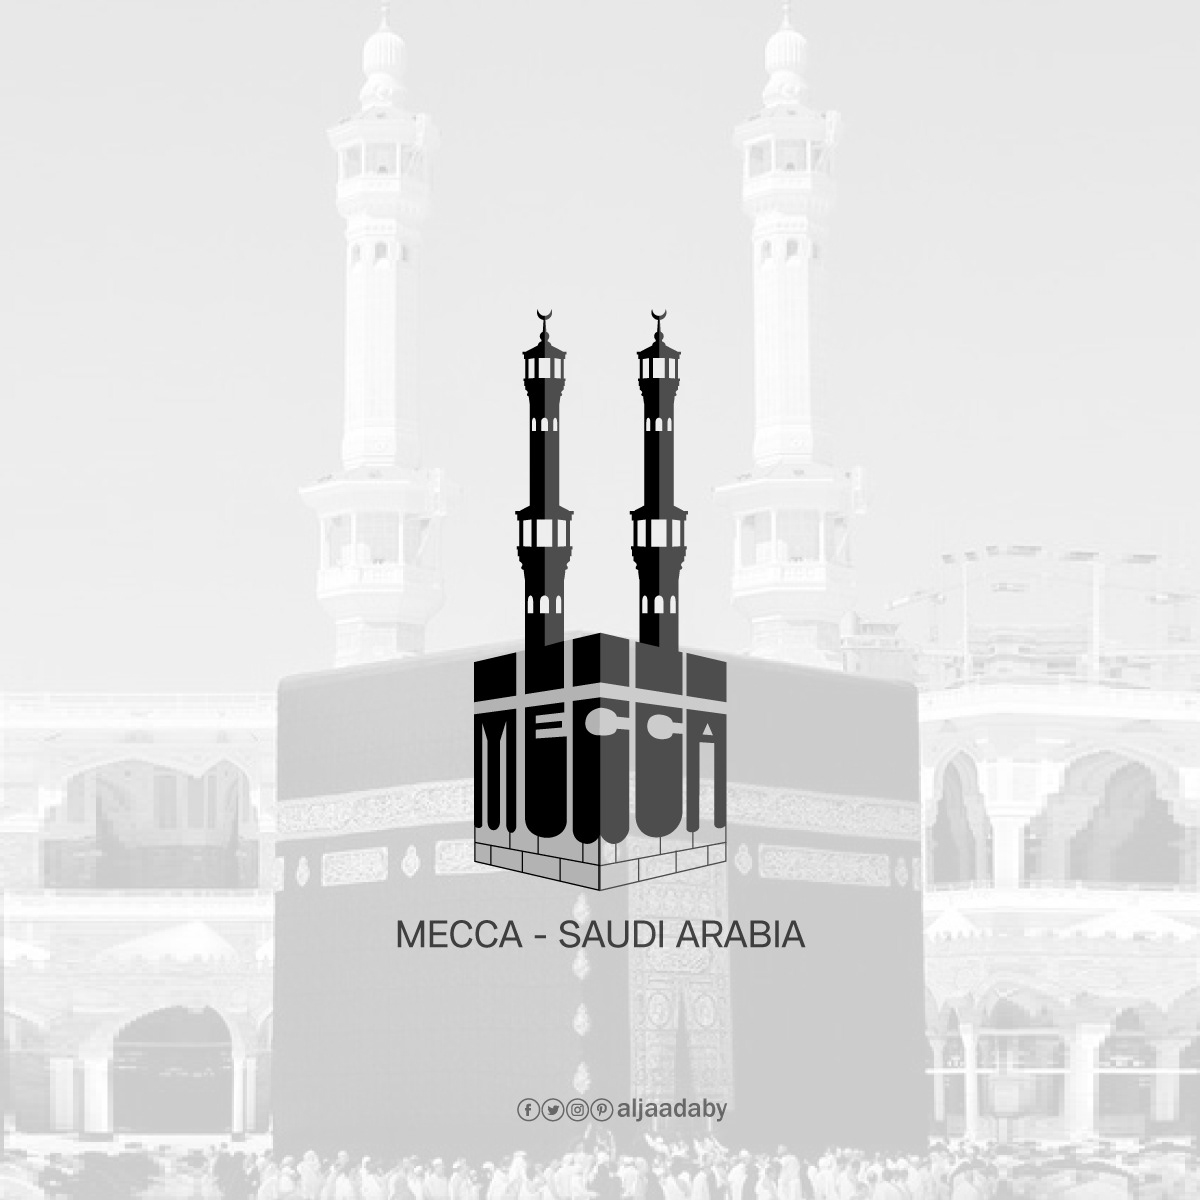 Typographic city logos based on their famous landmarks - Mecca